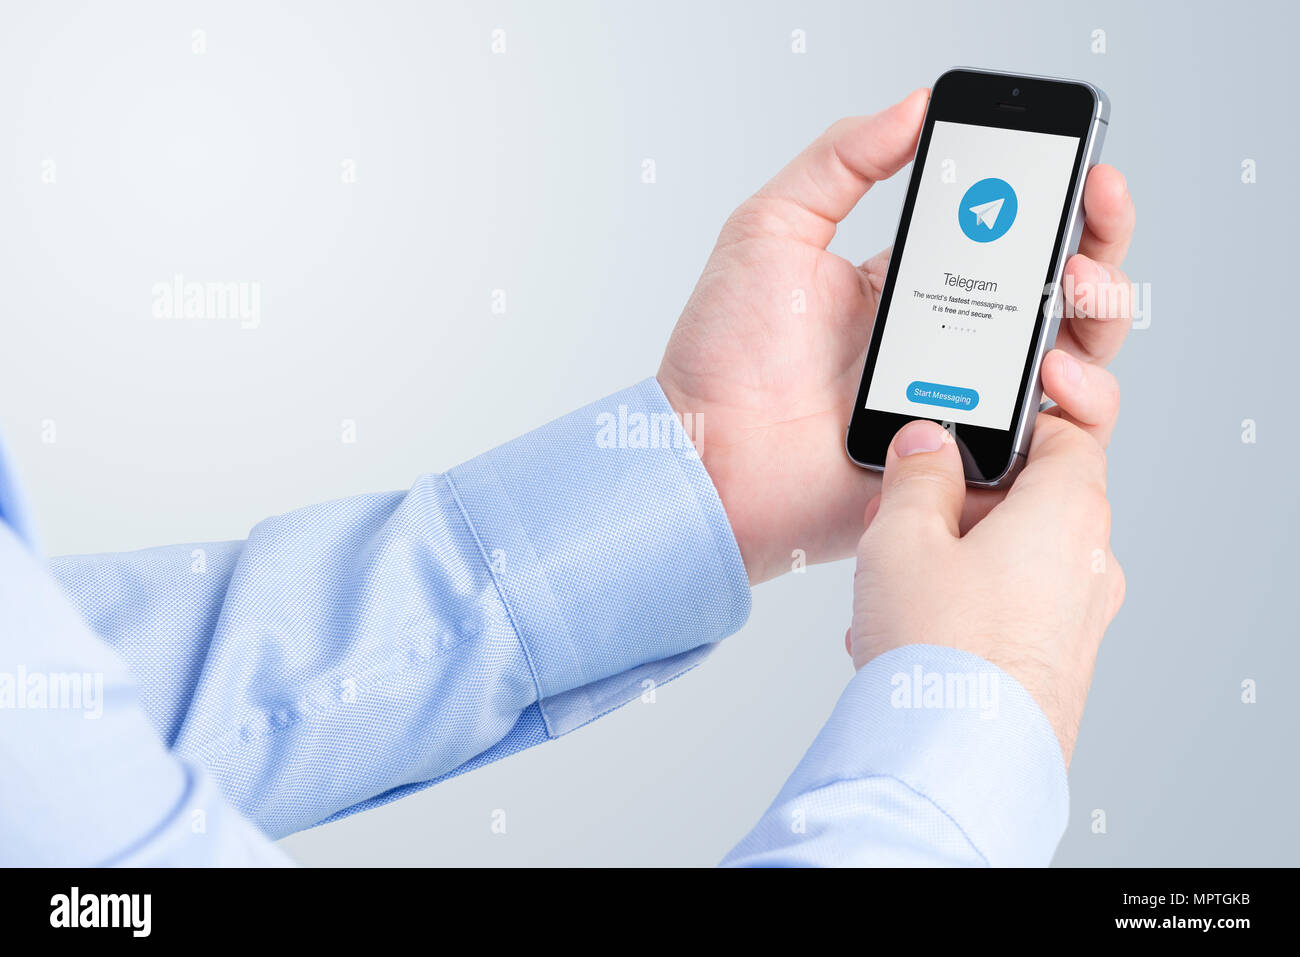 Telegram messenger on iPhone display in male hands. Stock Photo